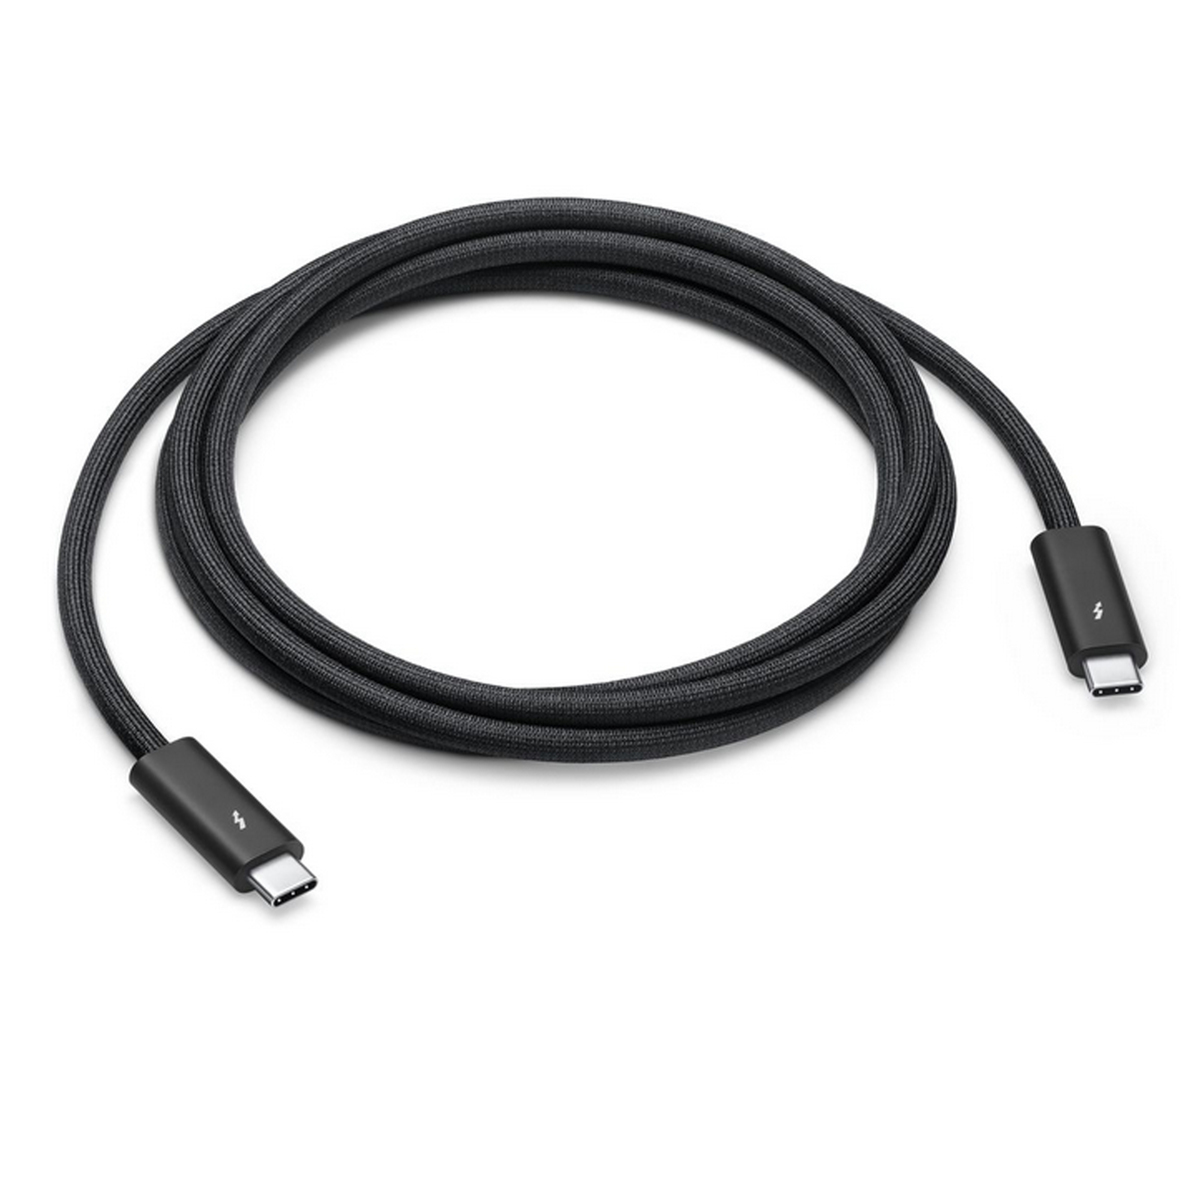 Apple Thunderbolt 4 Pro Cable, 1.8 m, Black, MN713